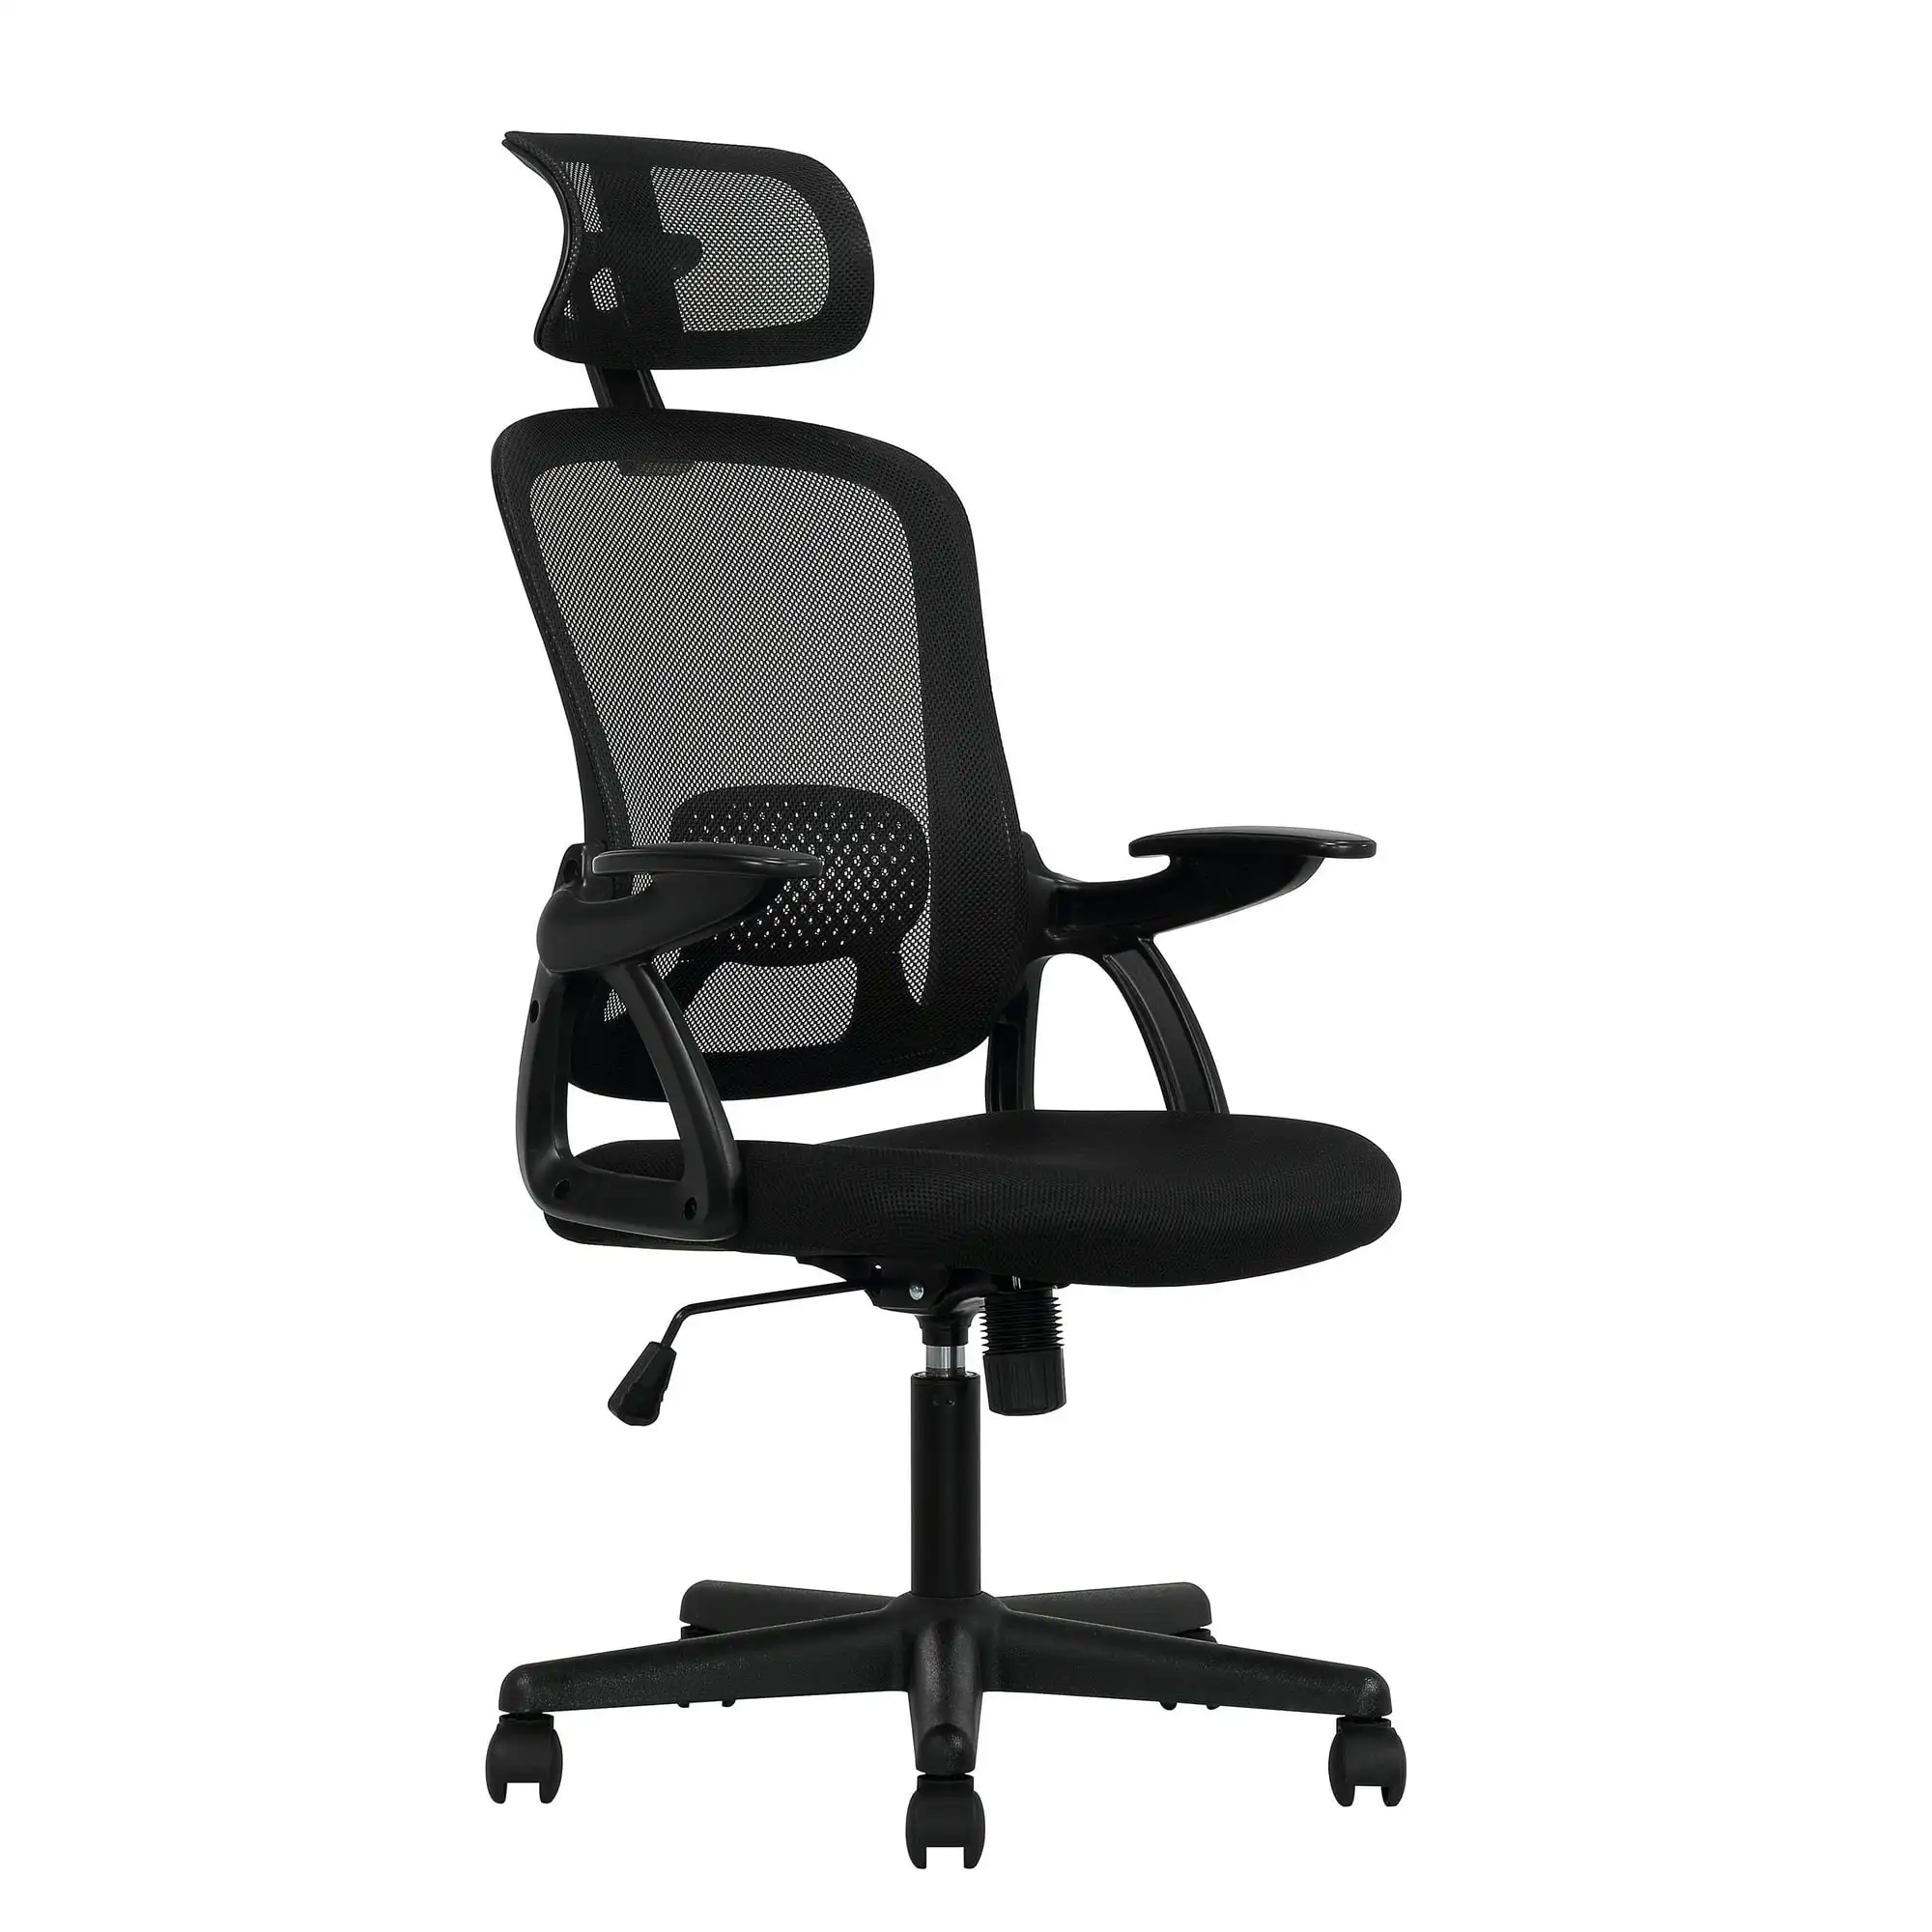 https://ae01.alicdn.com/kf/S39bcd21a48da49548c53558f8d3a39724/Mainstays-Ergonomic-Office-Chair-with-Adjustable-Headrest-Black-Fabric-275lb-capacity.jpeg